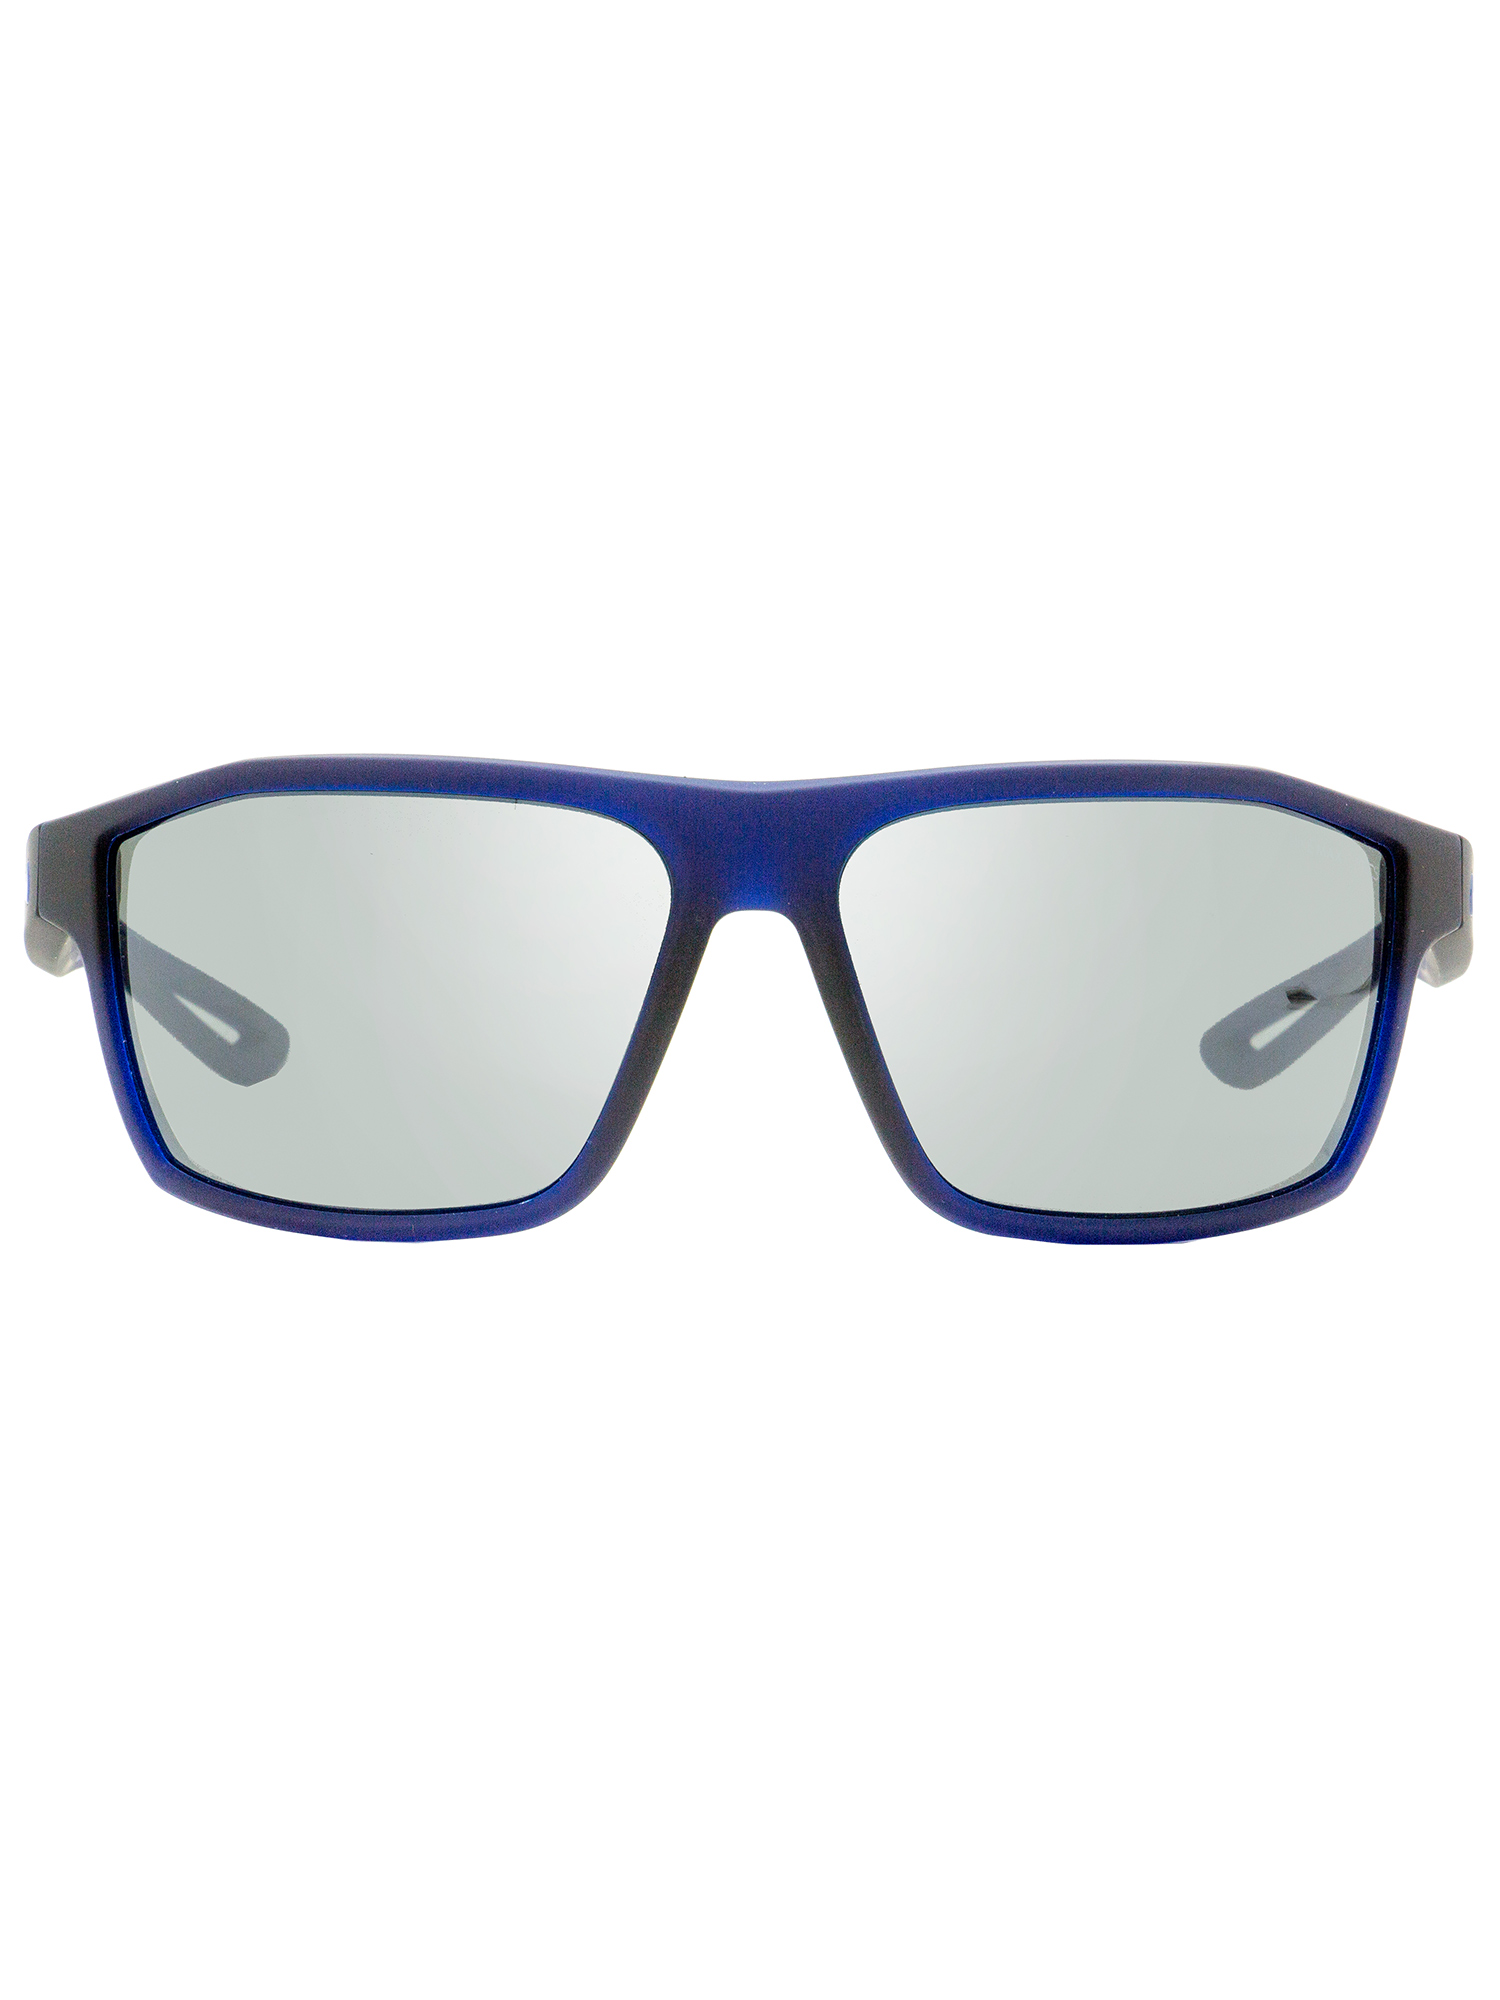 Nike Wrap Sunglasses Legend EV0940 400 Matte Dark Blue 65mm - image 2 of 2